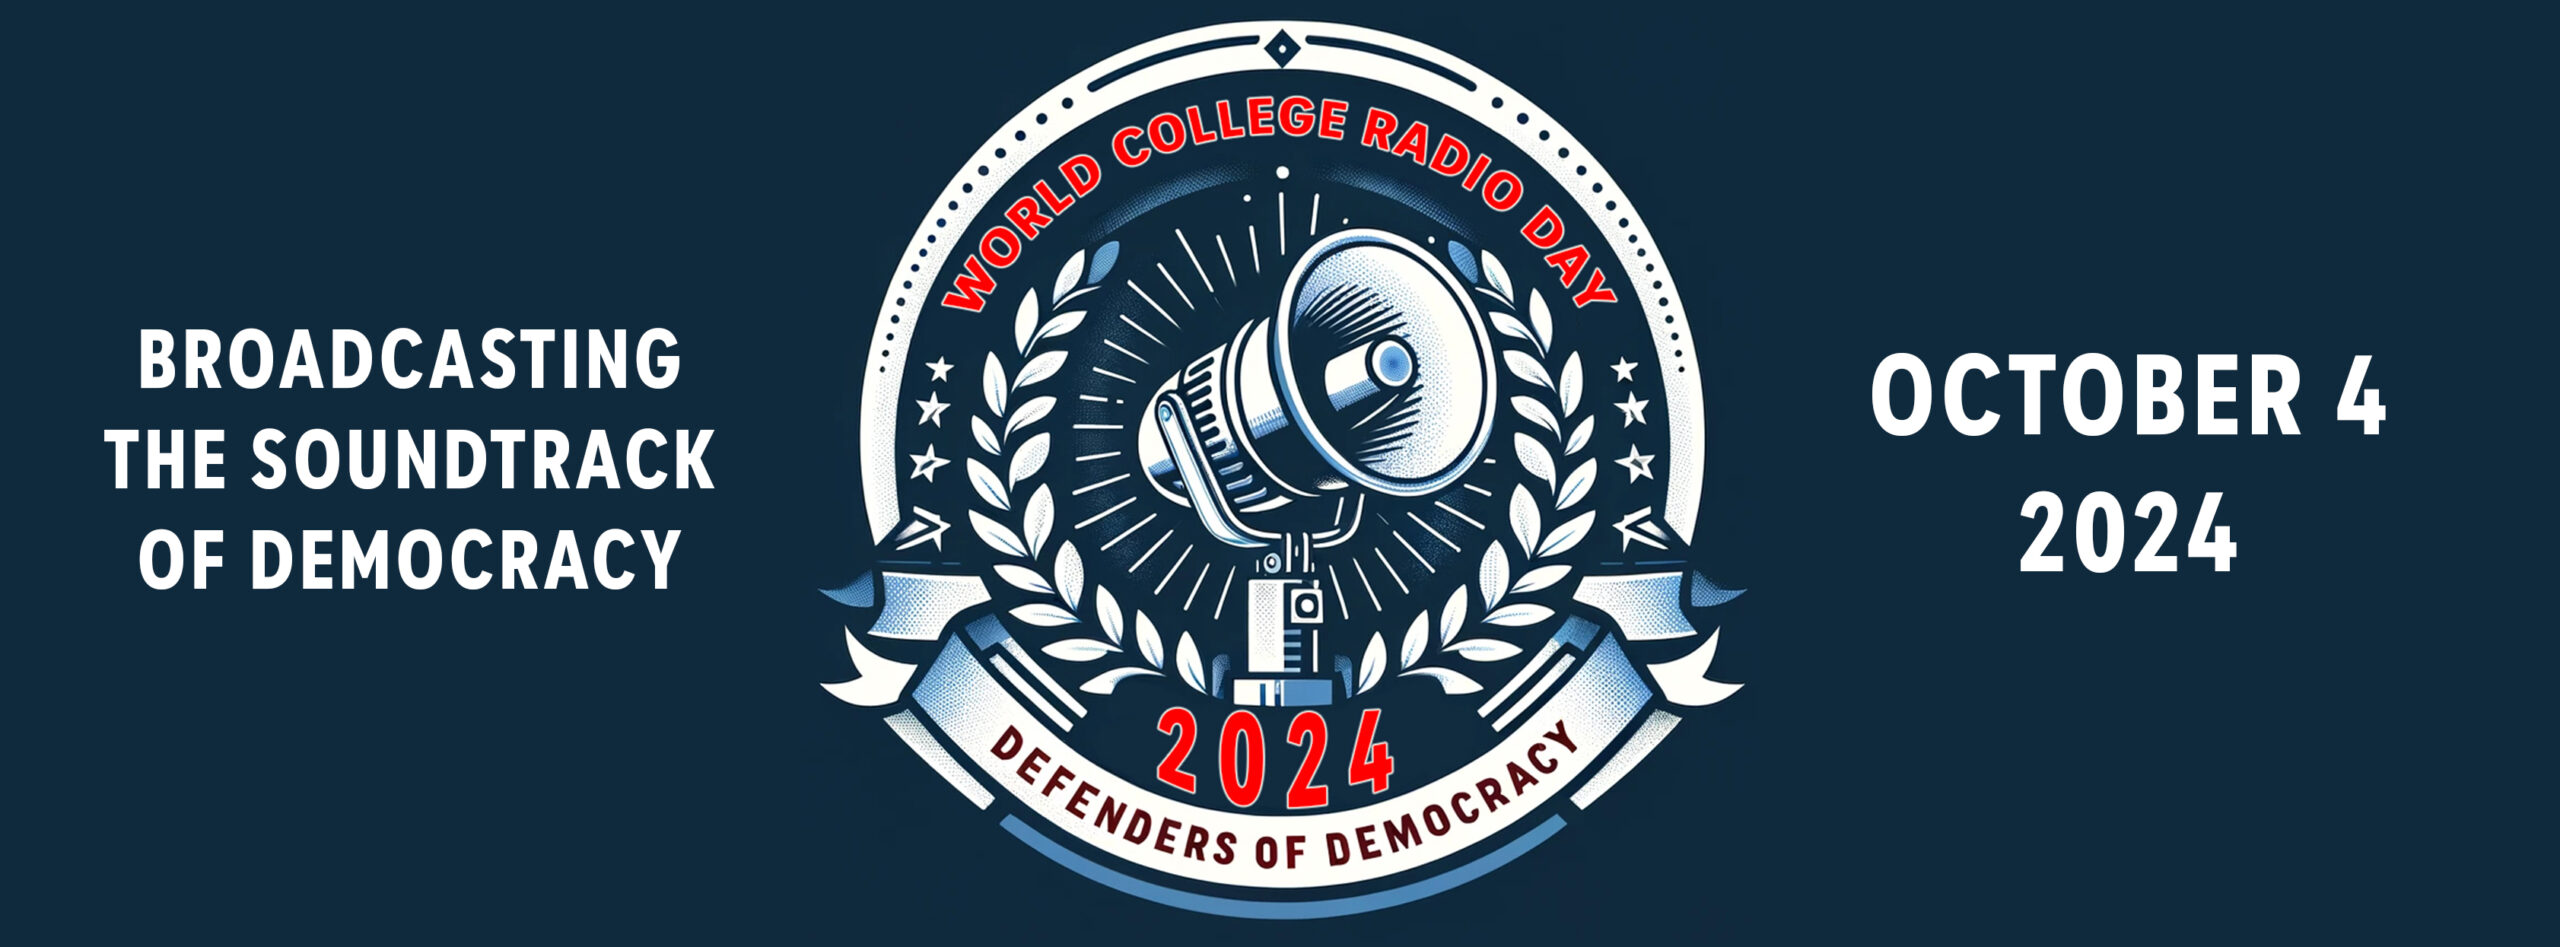 World College Radio Day 2024: Defenders of Democracy